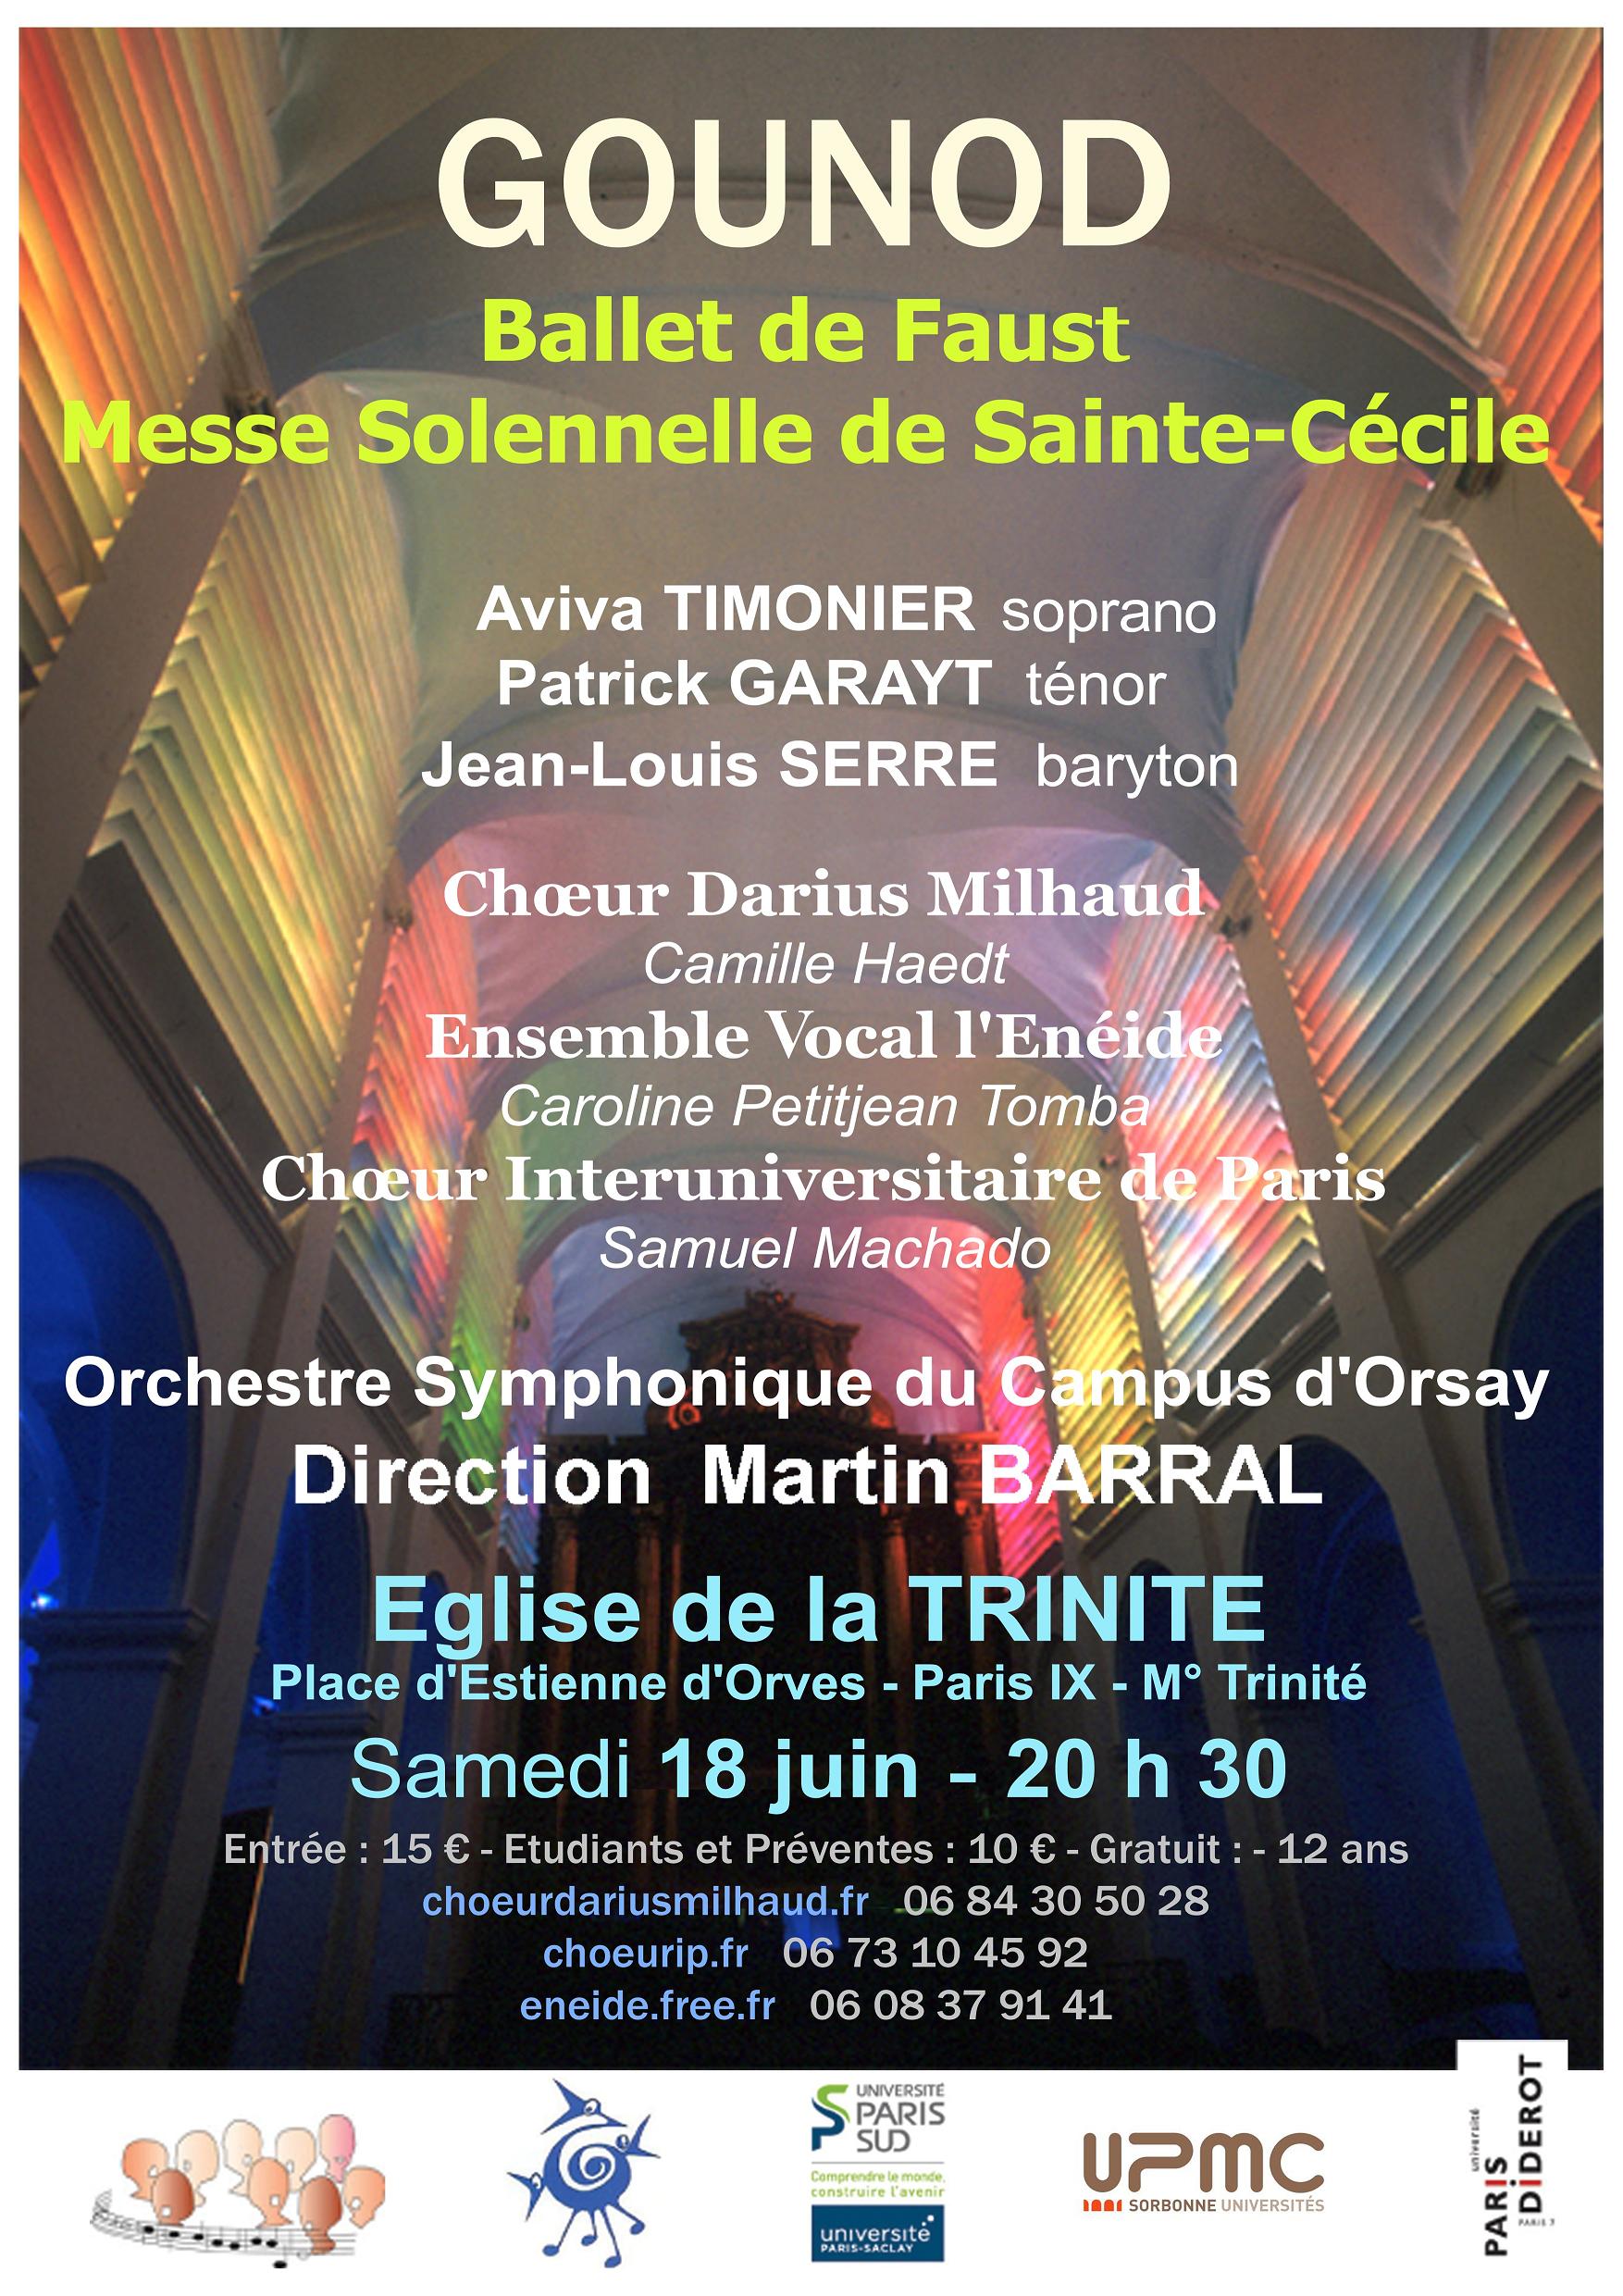 Concert Gounod 18 juin 2016